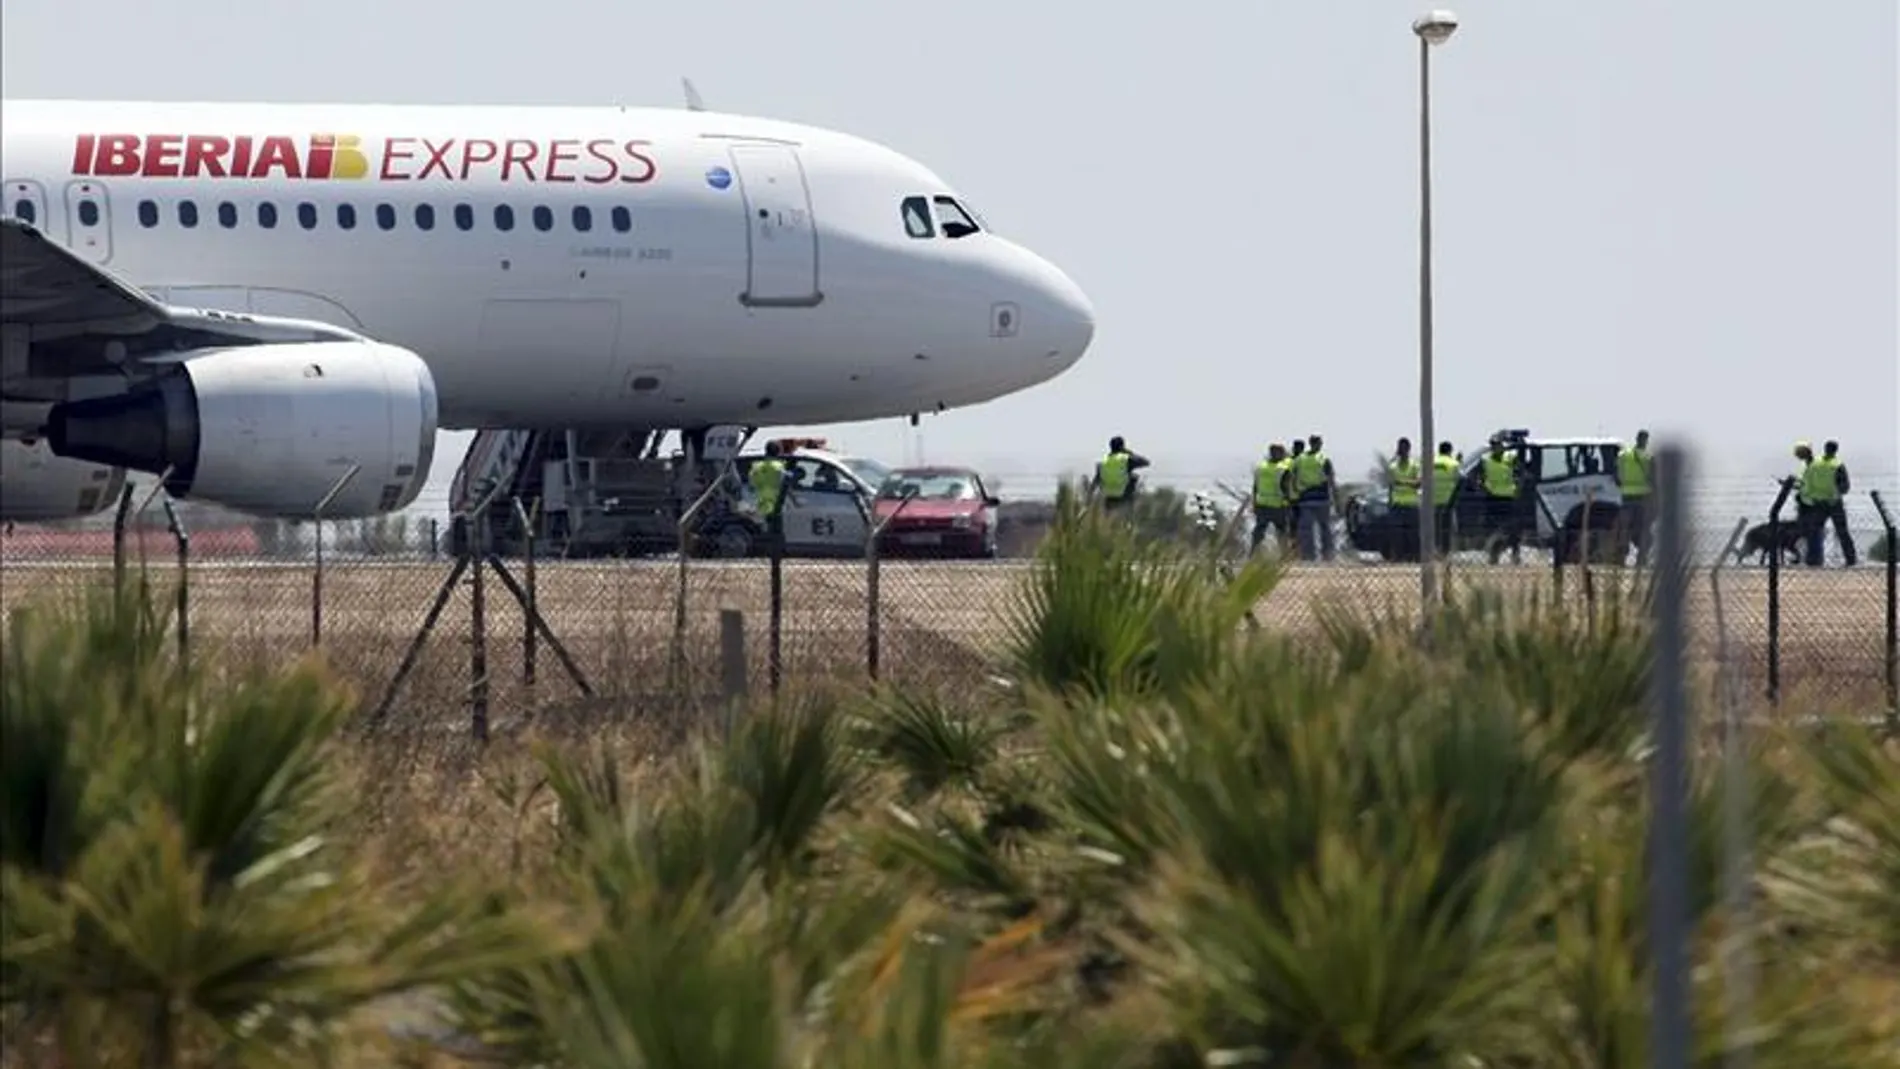 Condenan a Iberia Express a pagar 3.500 por impedir volar a una familia con exceso de equipaje